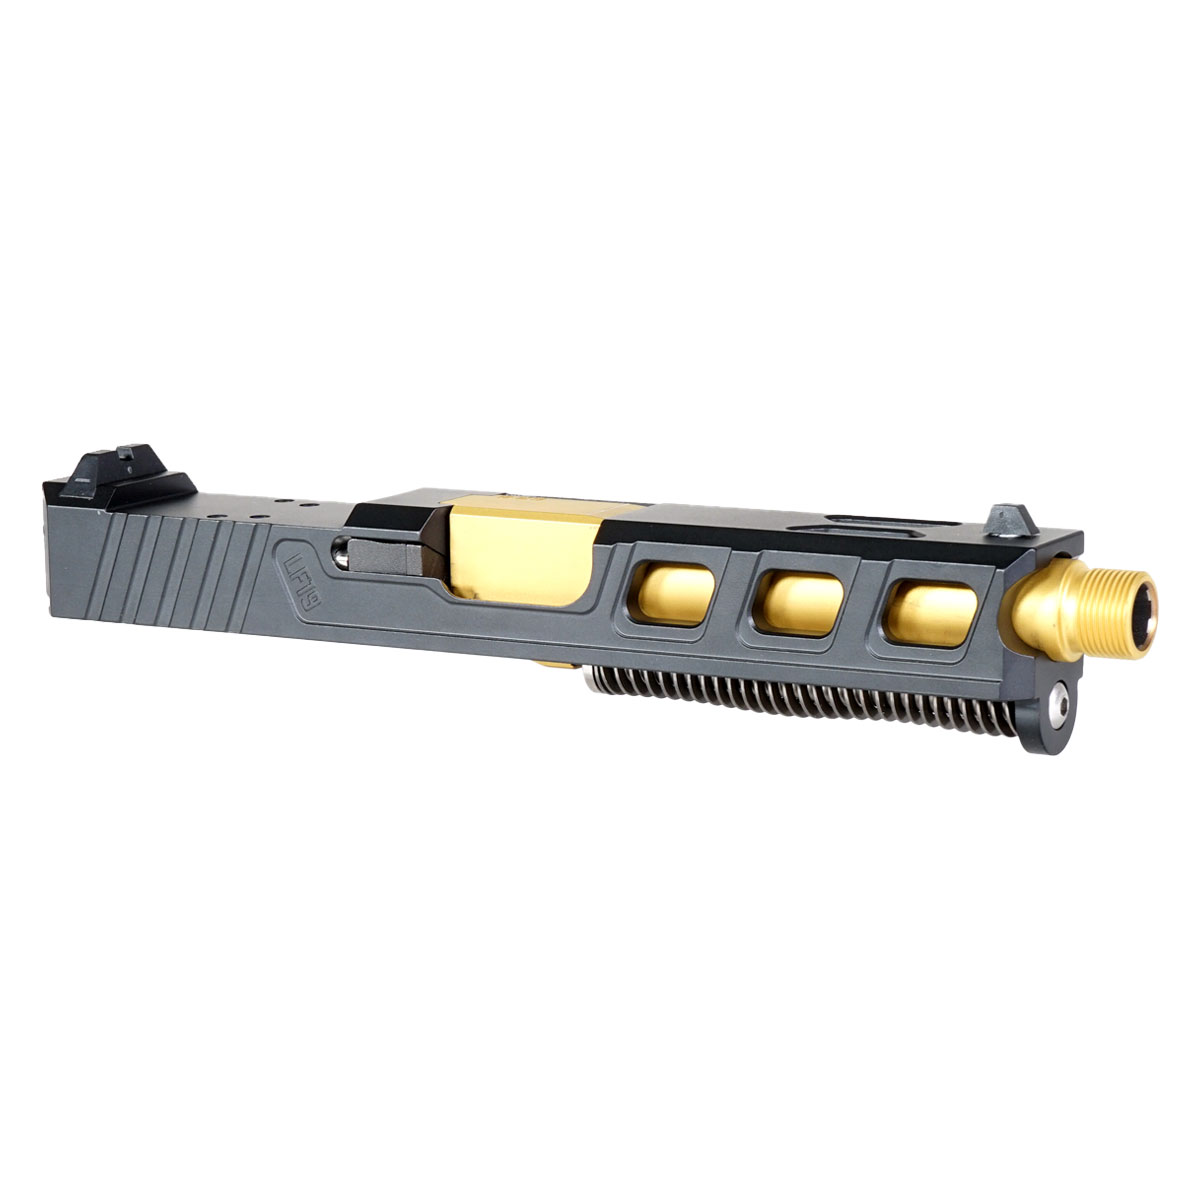 DTT 'Scary Sherry' 9mm Complete Slide Kit - Glock 19 Gen 1-3 Compatible